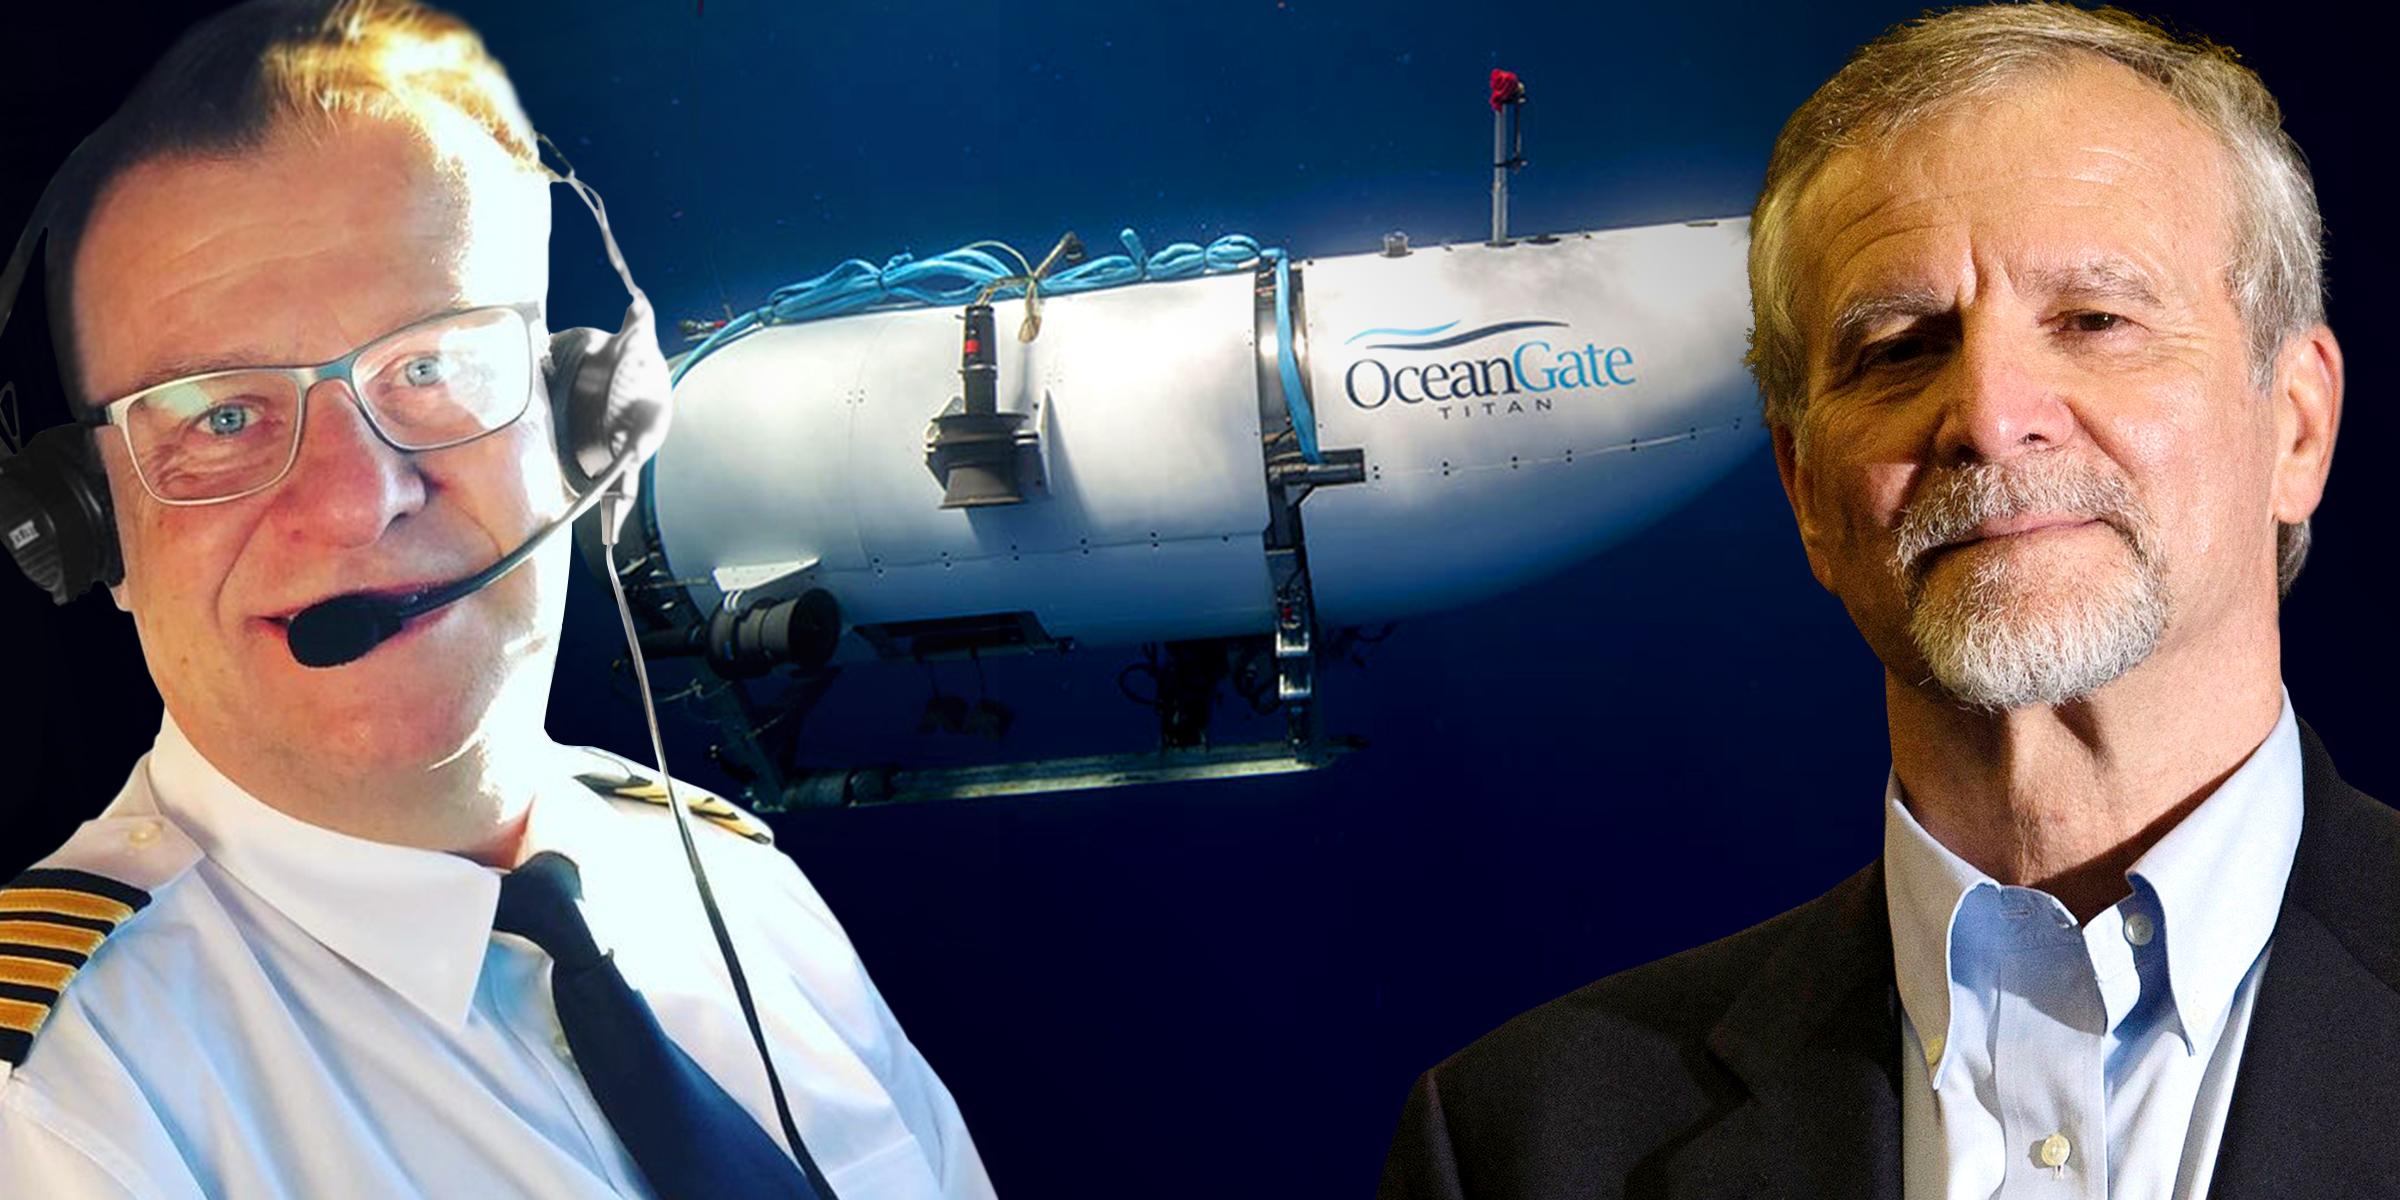 Hamish Harding, Paul-Henri Nargeolet et l'OceanGate submersible | Source: instagram.com/actionaviationchairman Getty Images